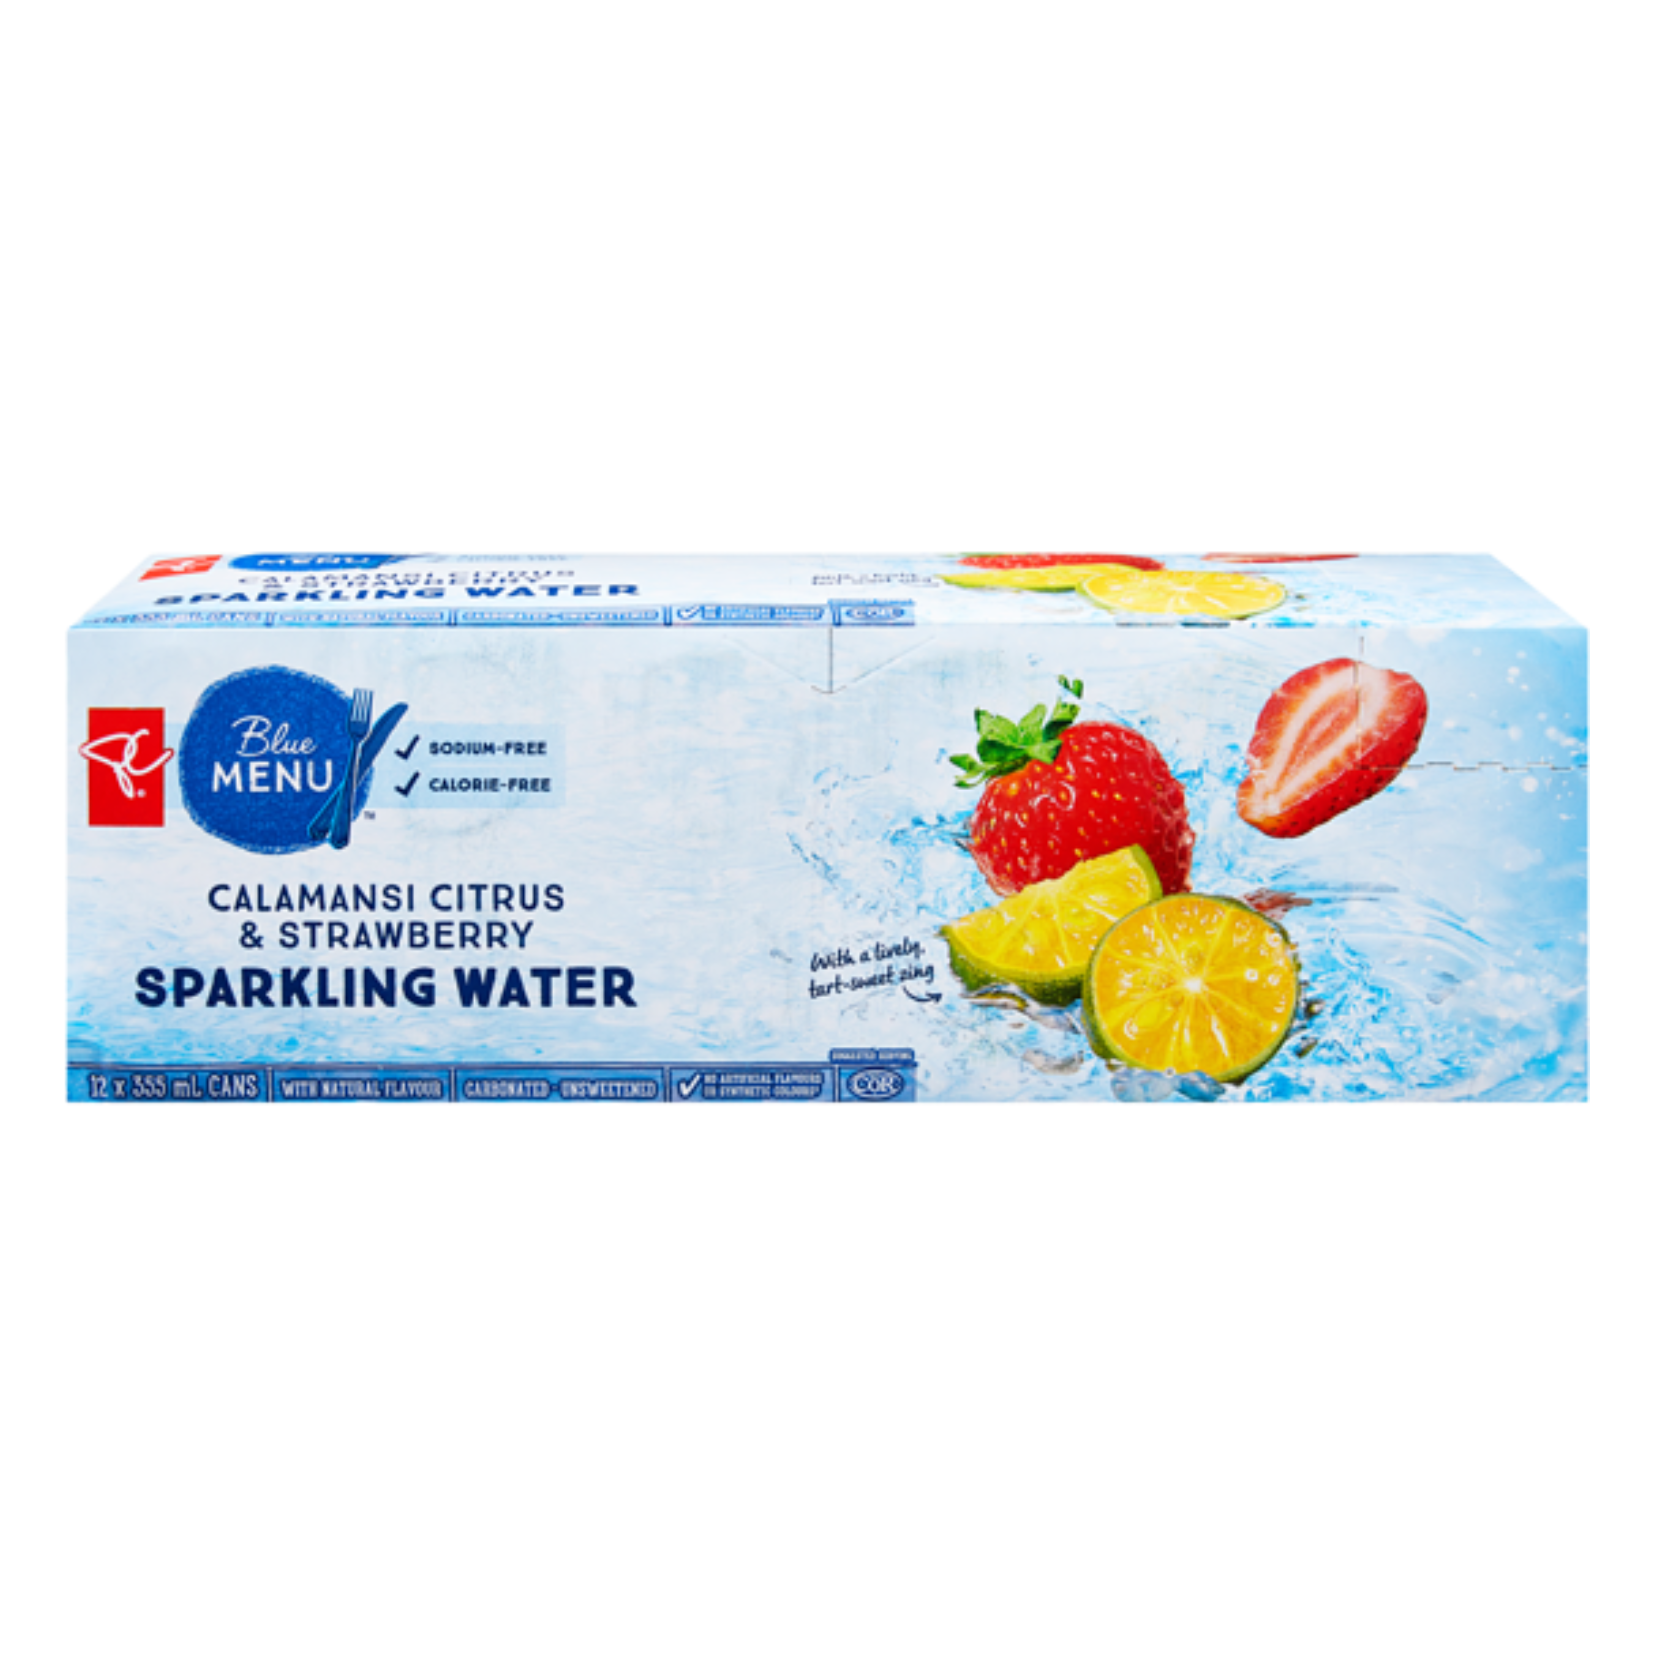 Blue Menu Calamansi Citrus & Strawberry Sparkling Water 355ml x 12